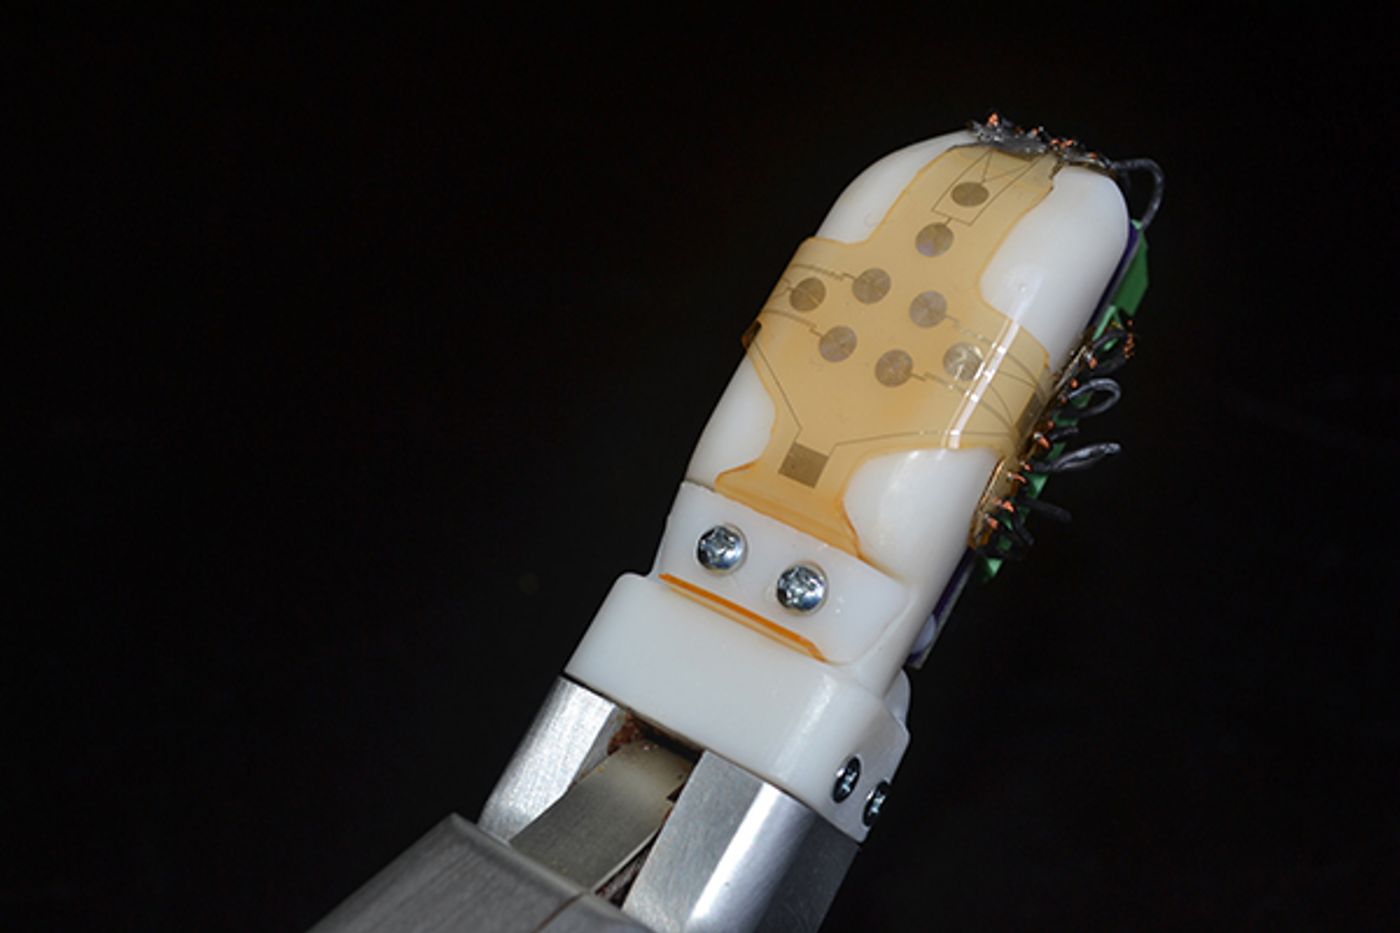 sensor skin on robotic finger, credit: UCLA Engineering